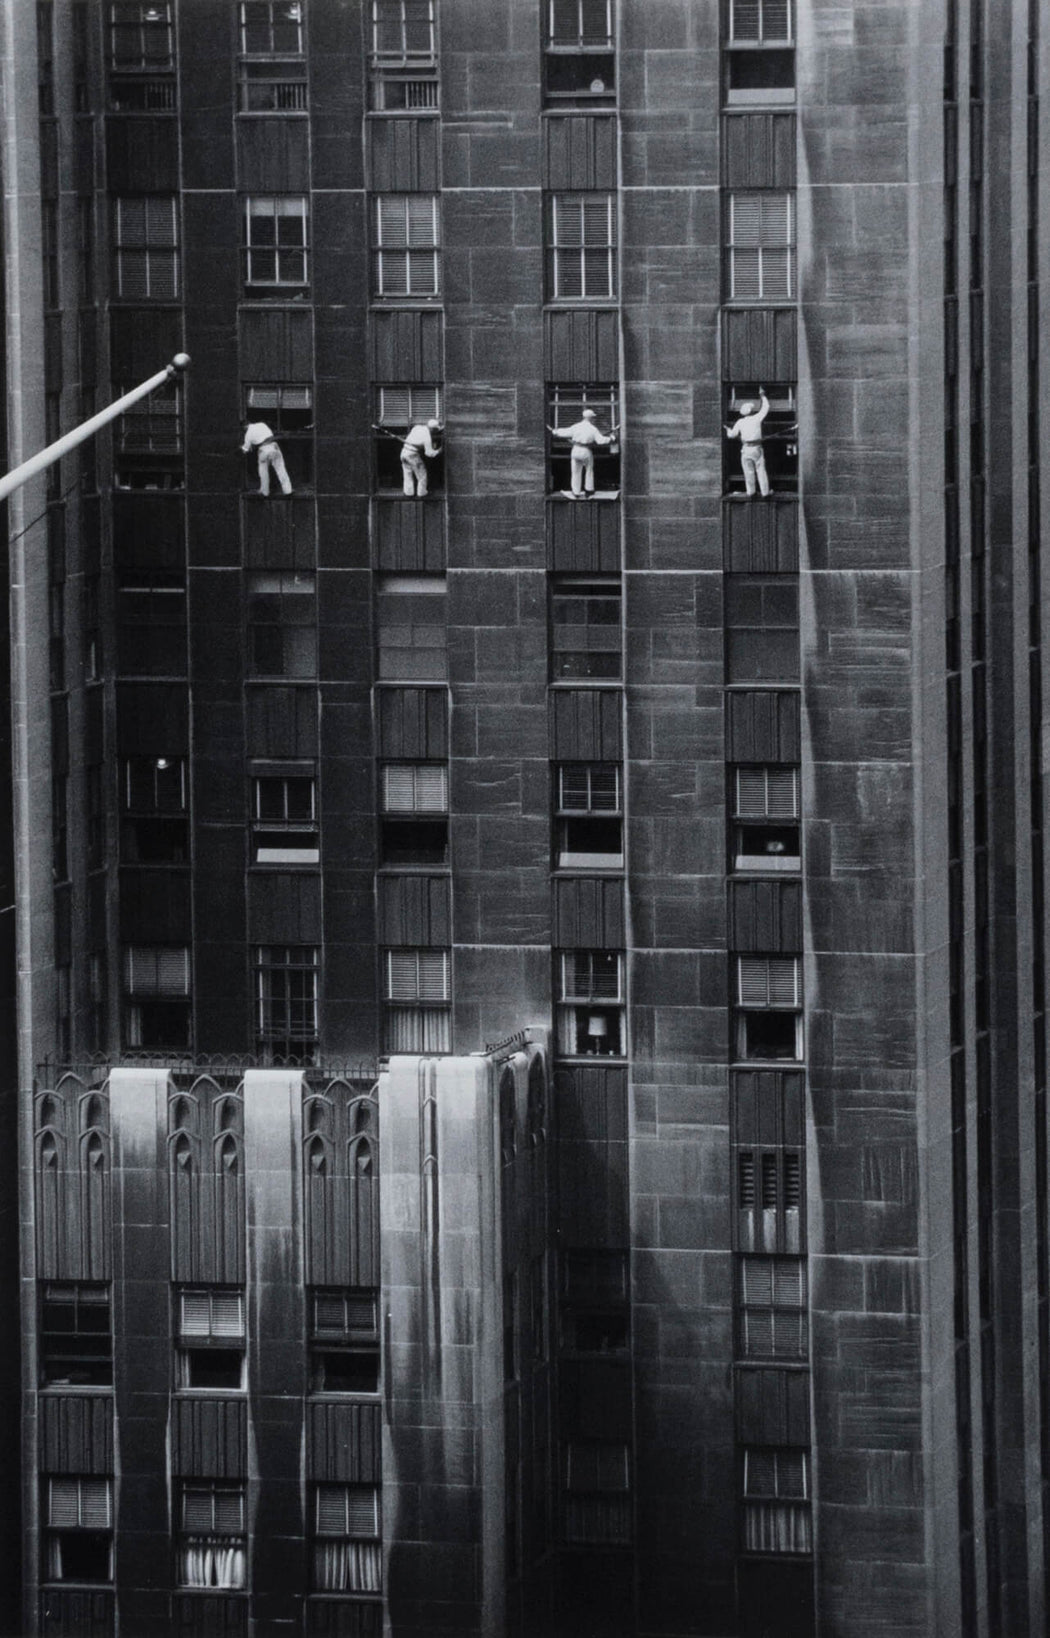 FFOTO-Inge Morath-Forty-Eighth Street window washers, New York City, USA